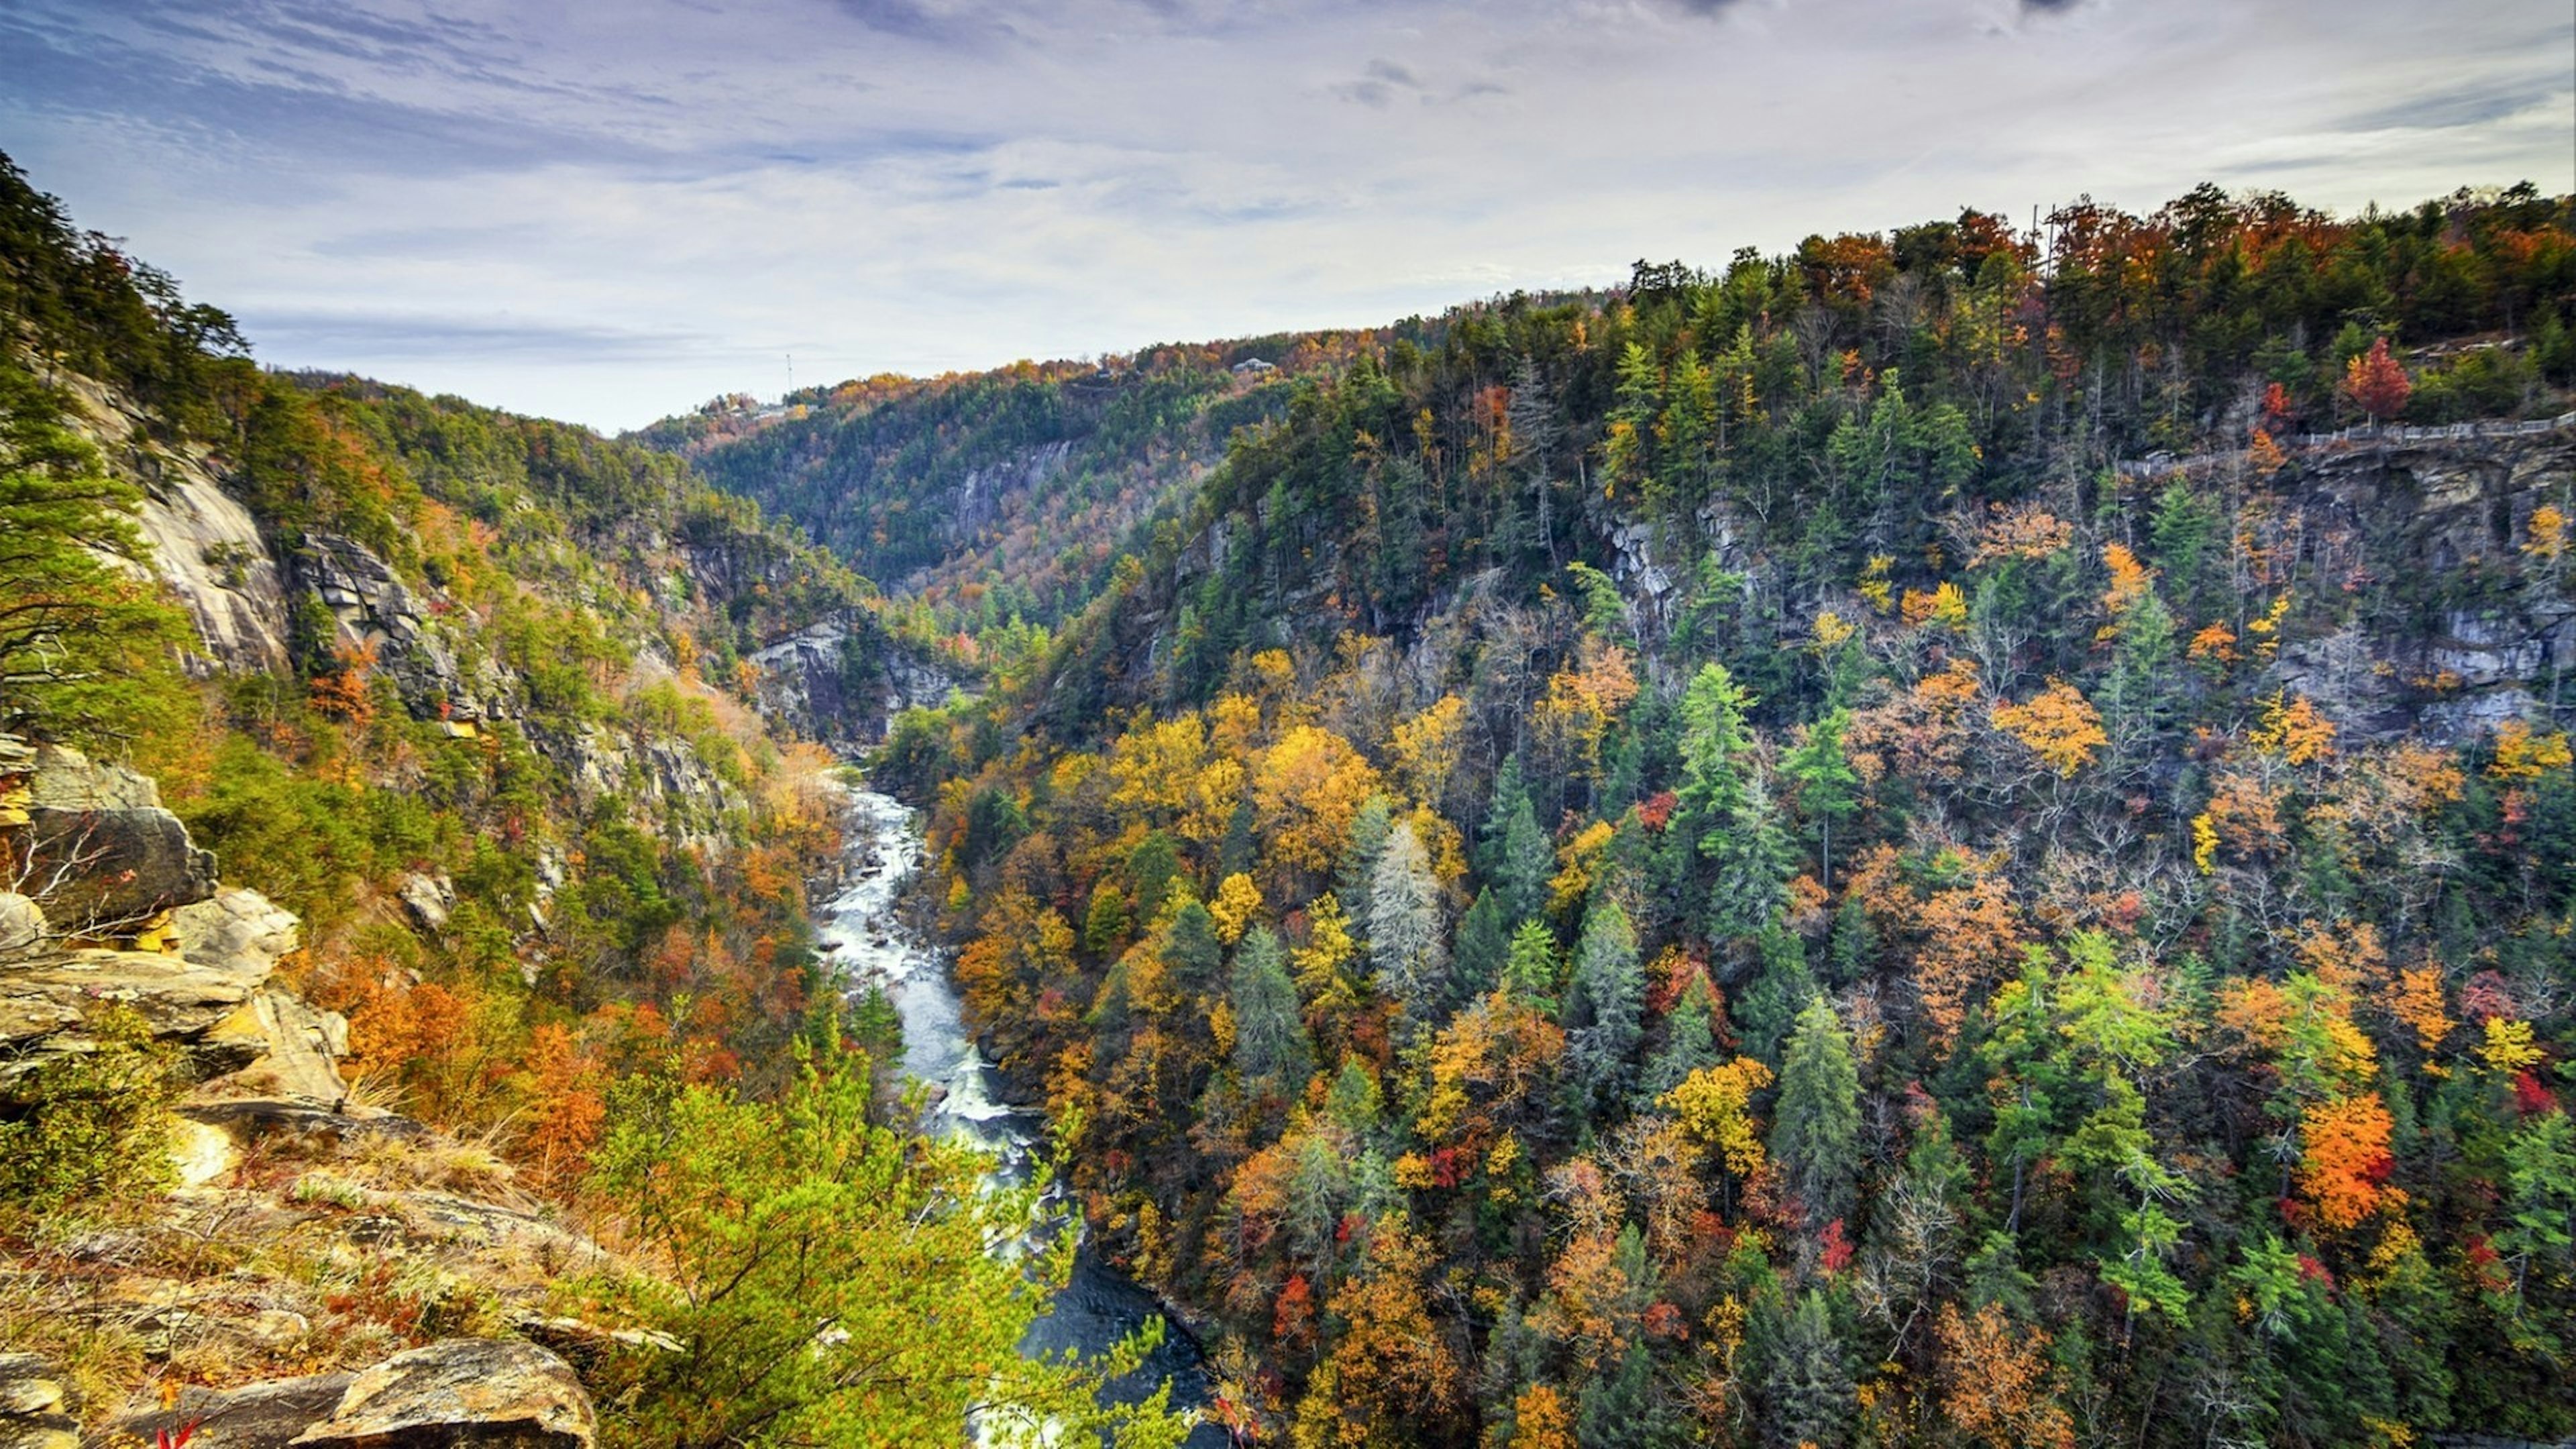 Tallulah Gorge in Georgia, USA.